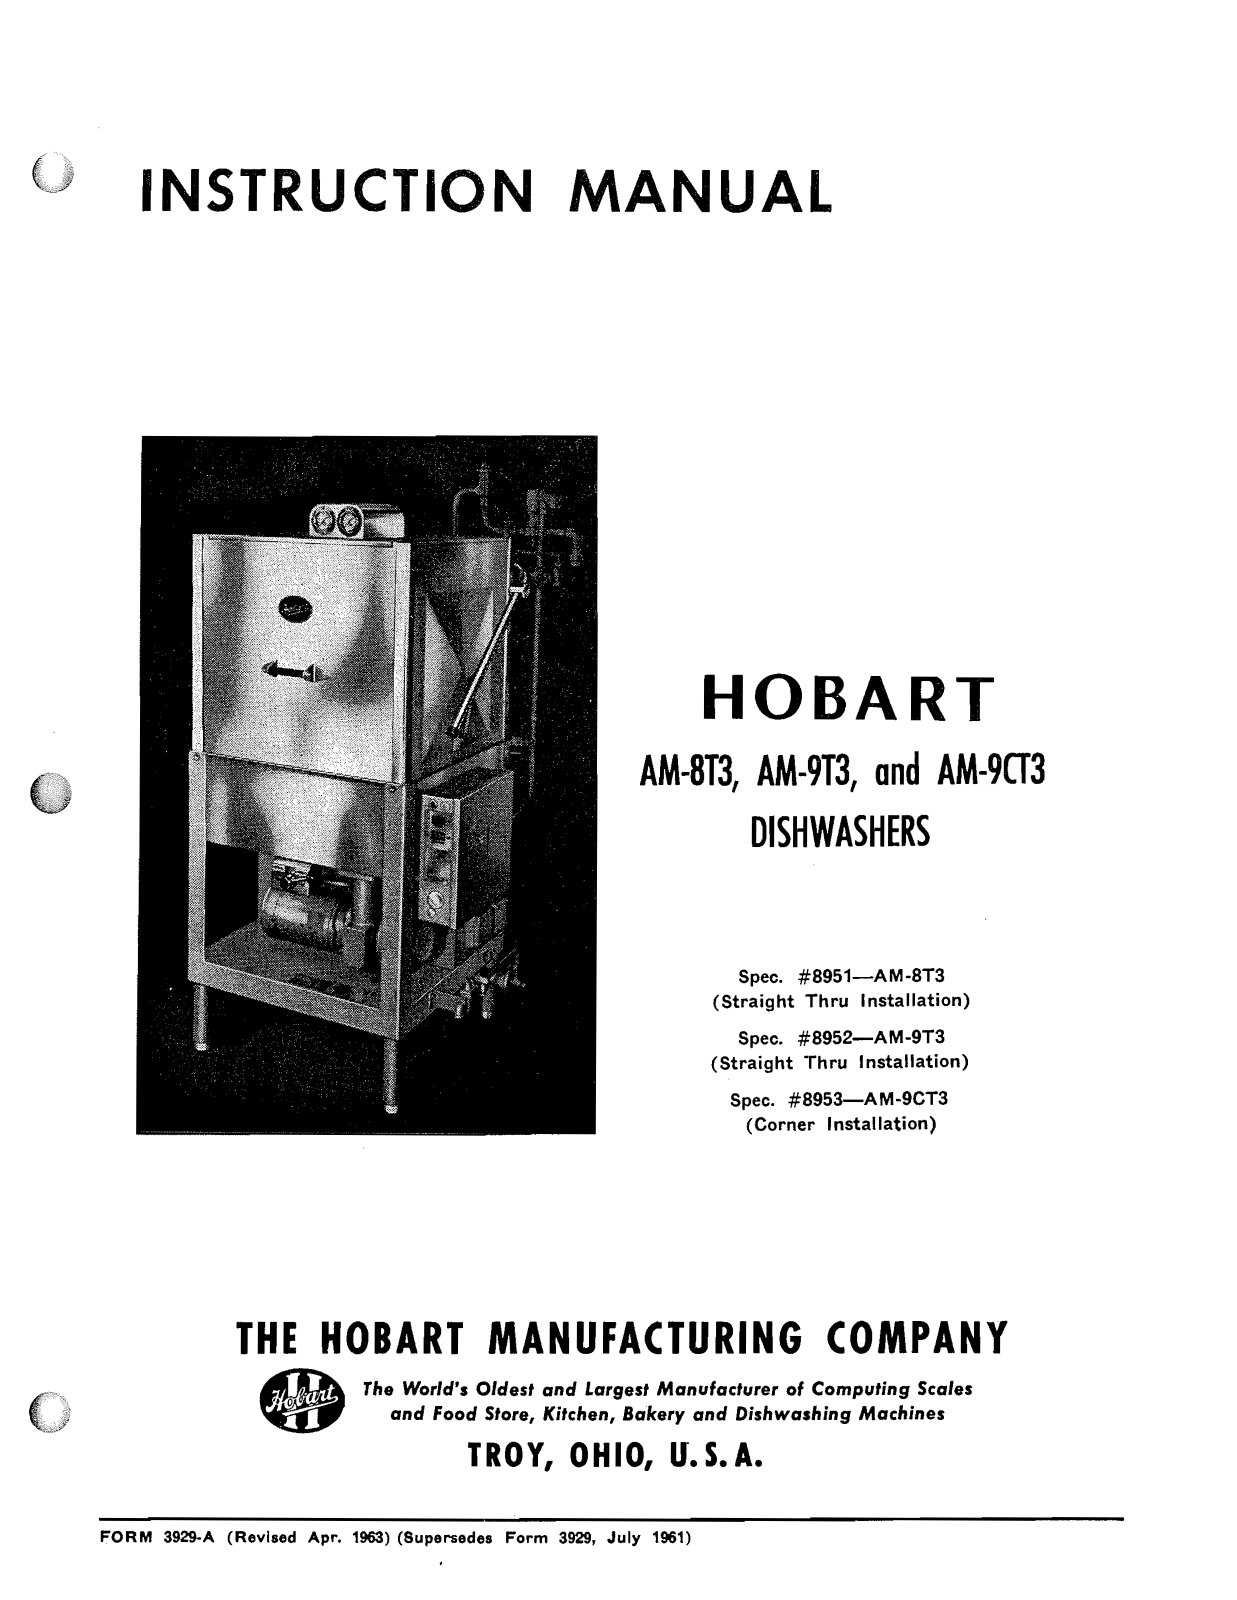 Hobart AM-8T3 Installation Manual